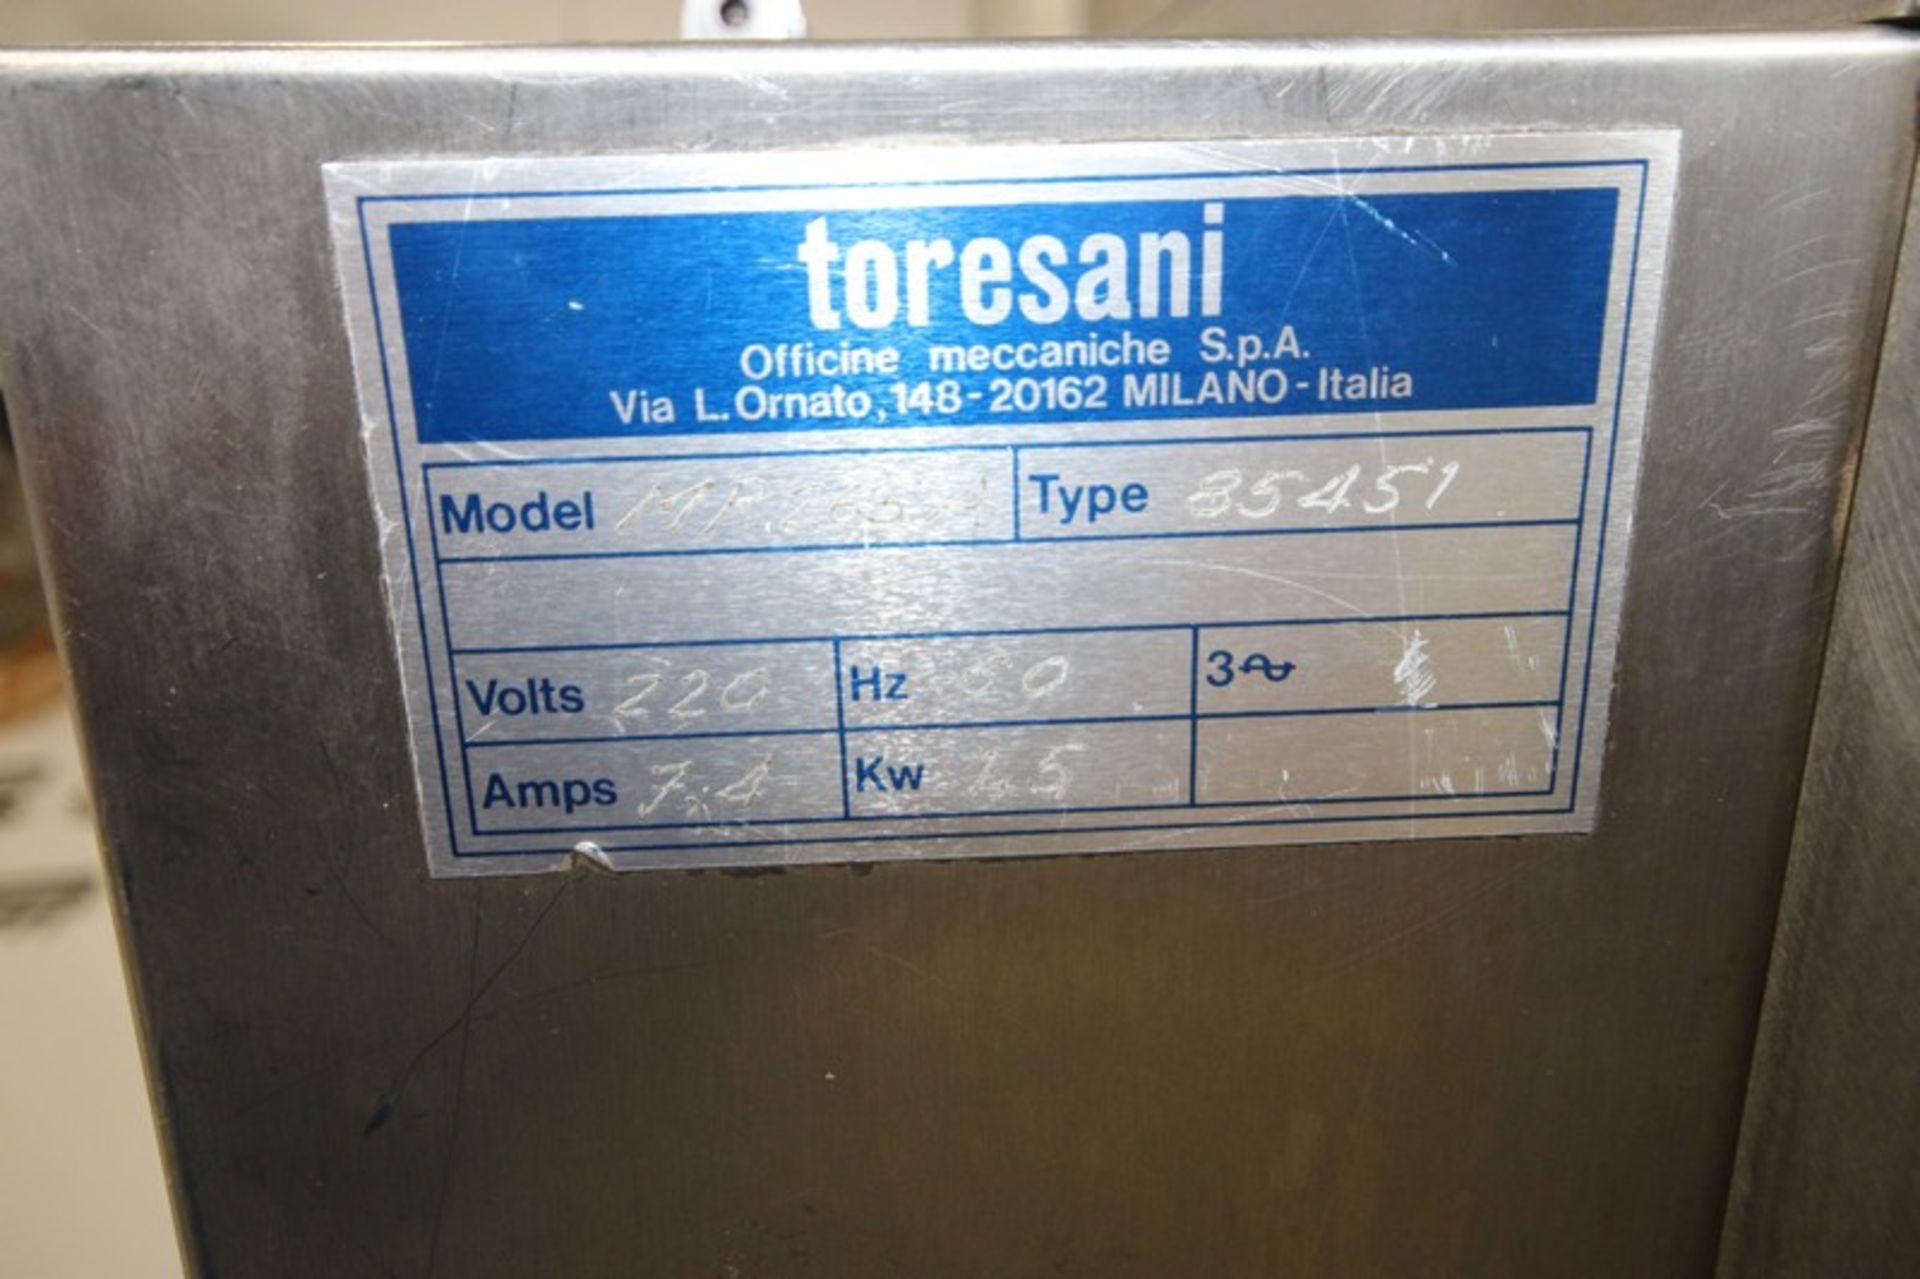 Toresani Tortellini Machine, M/N MR265A, Type 85451, 220 Volts - Image 4 of 5